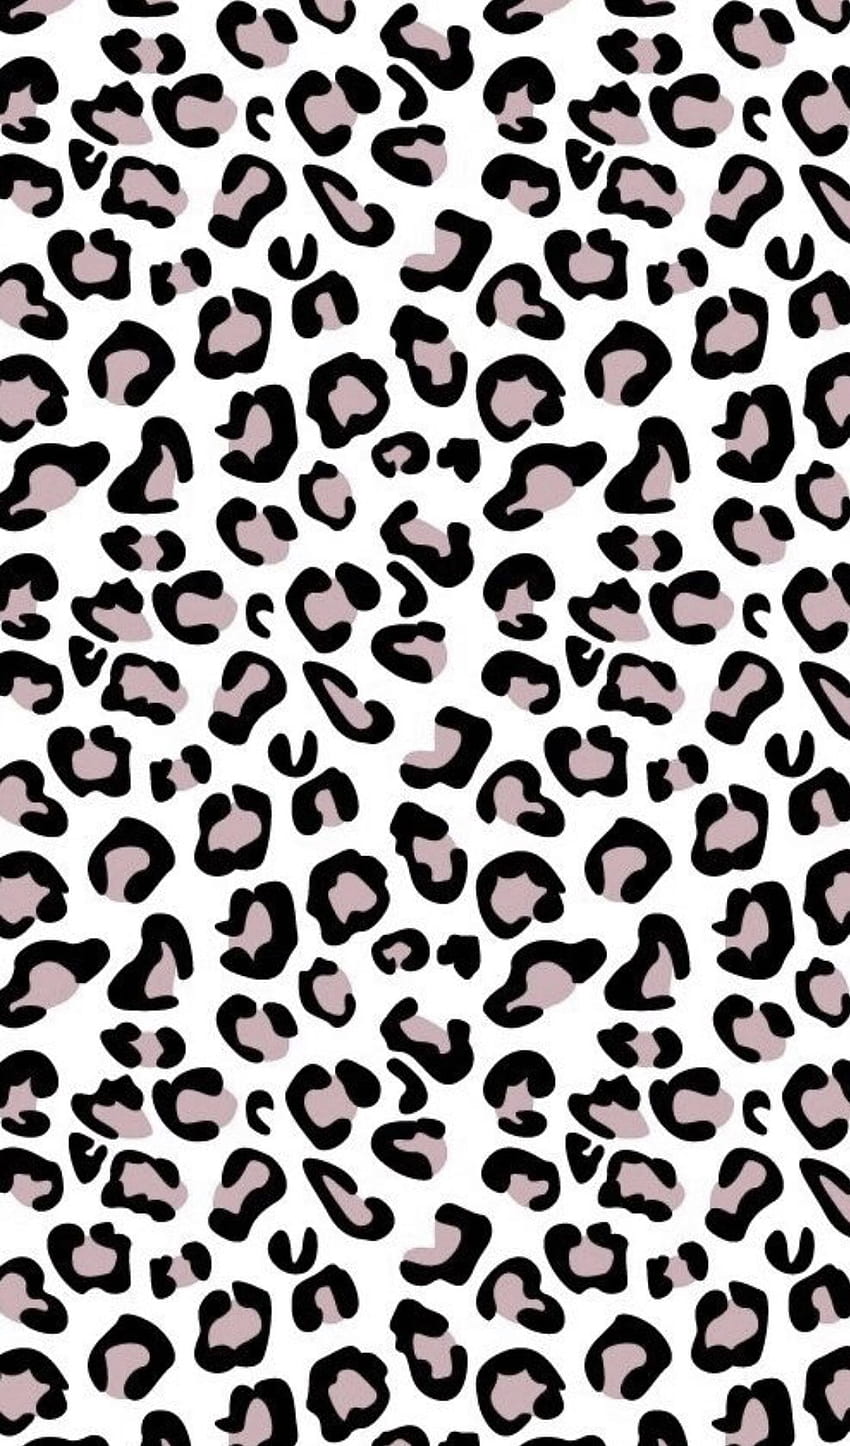 Leopard Animal Print wallpaper in blush pink  I Love Wallpaper